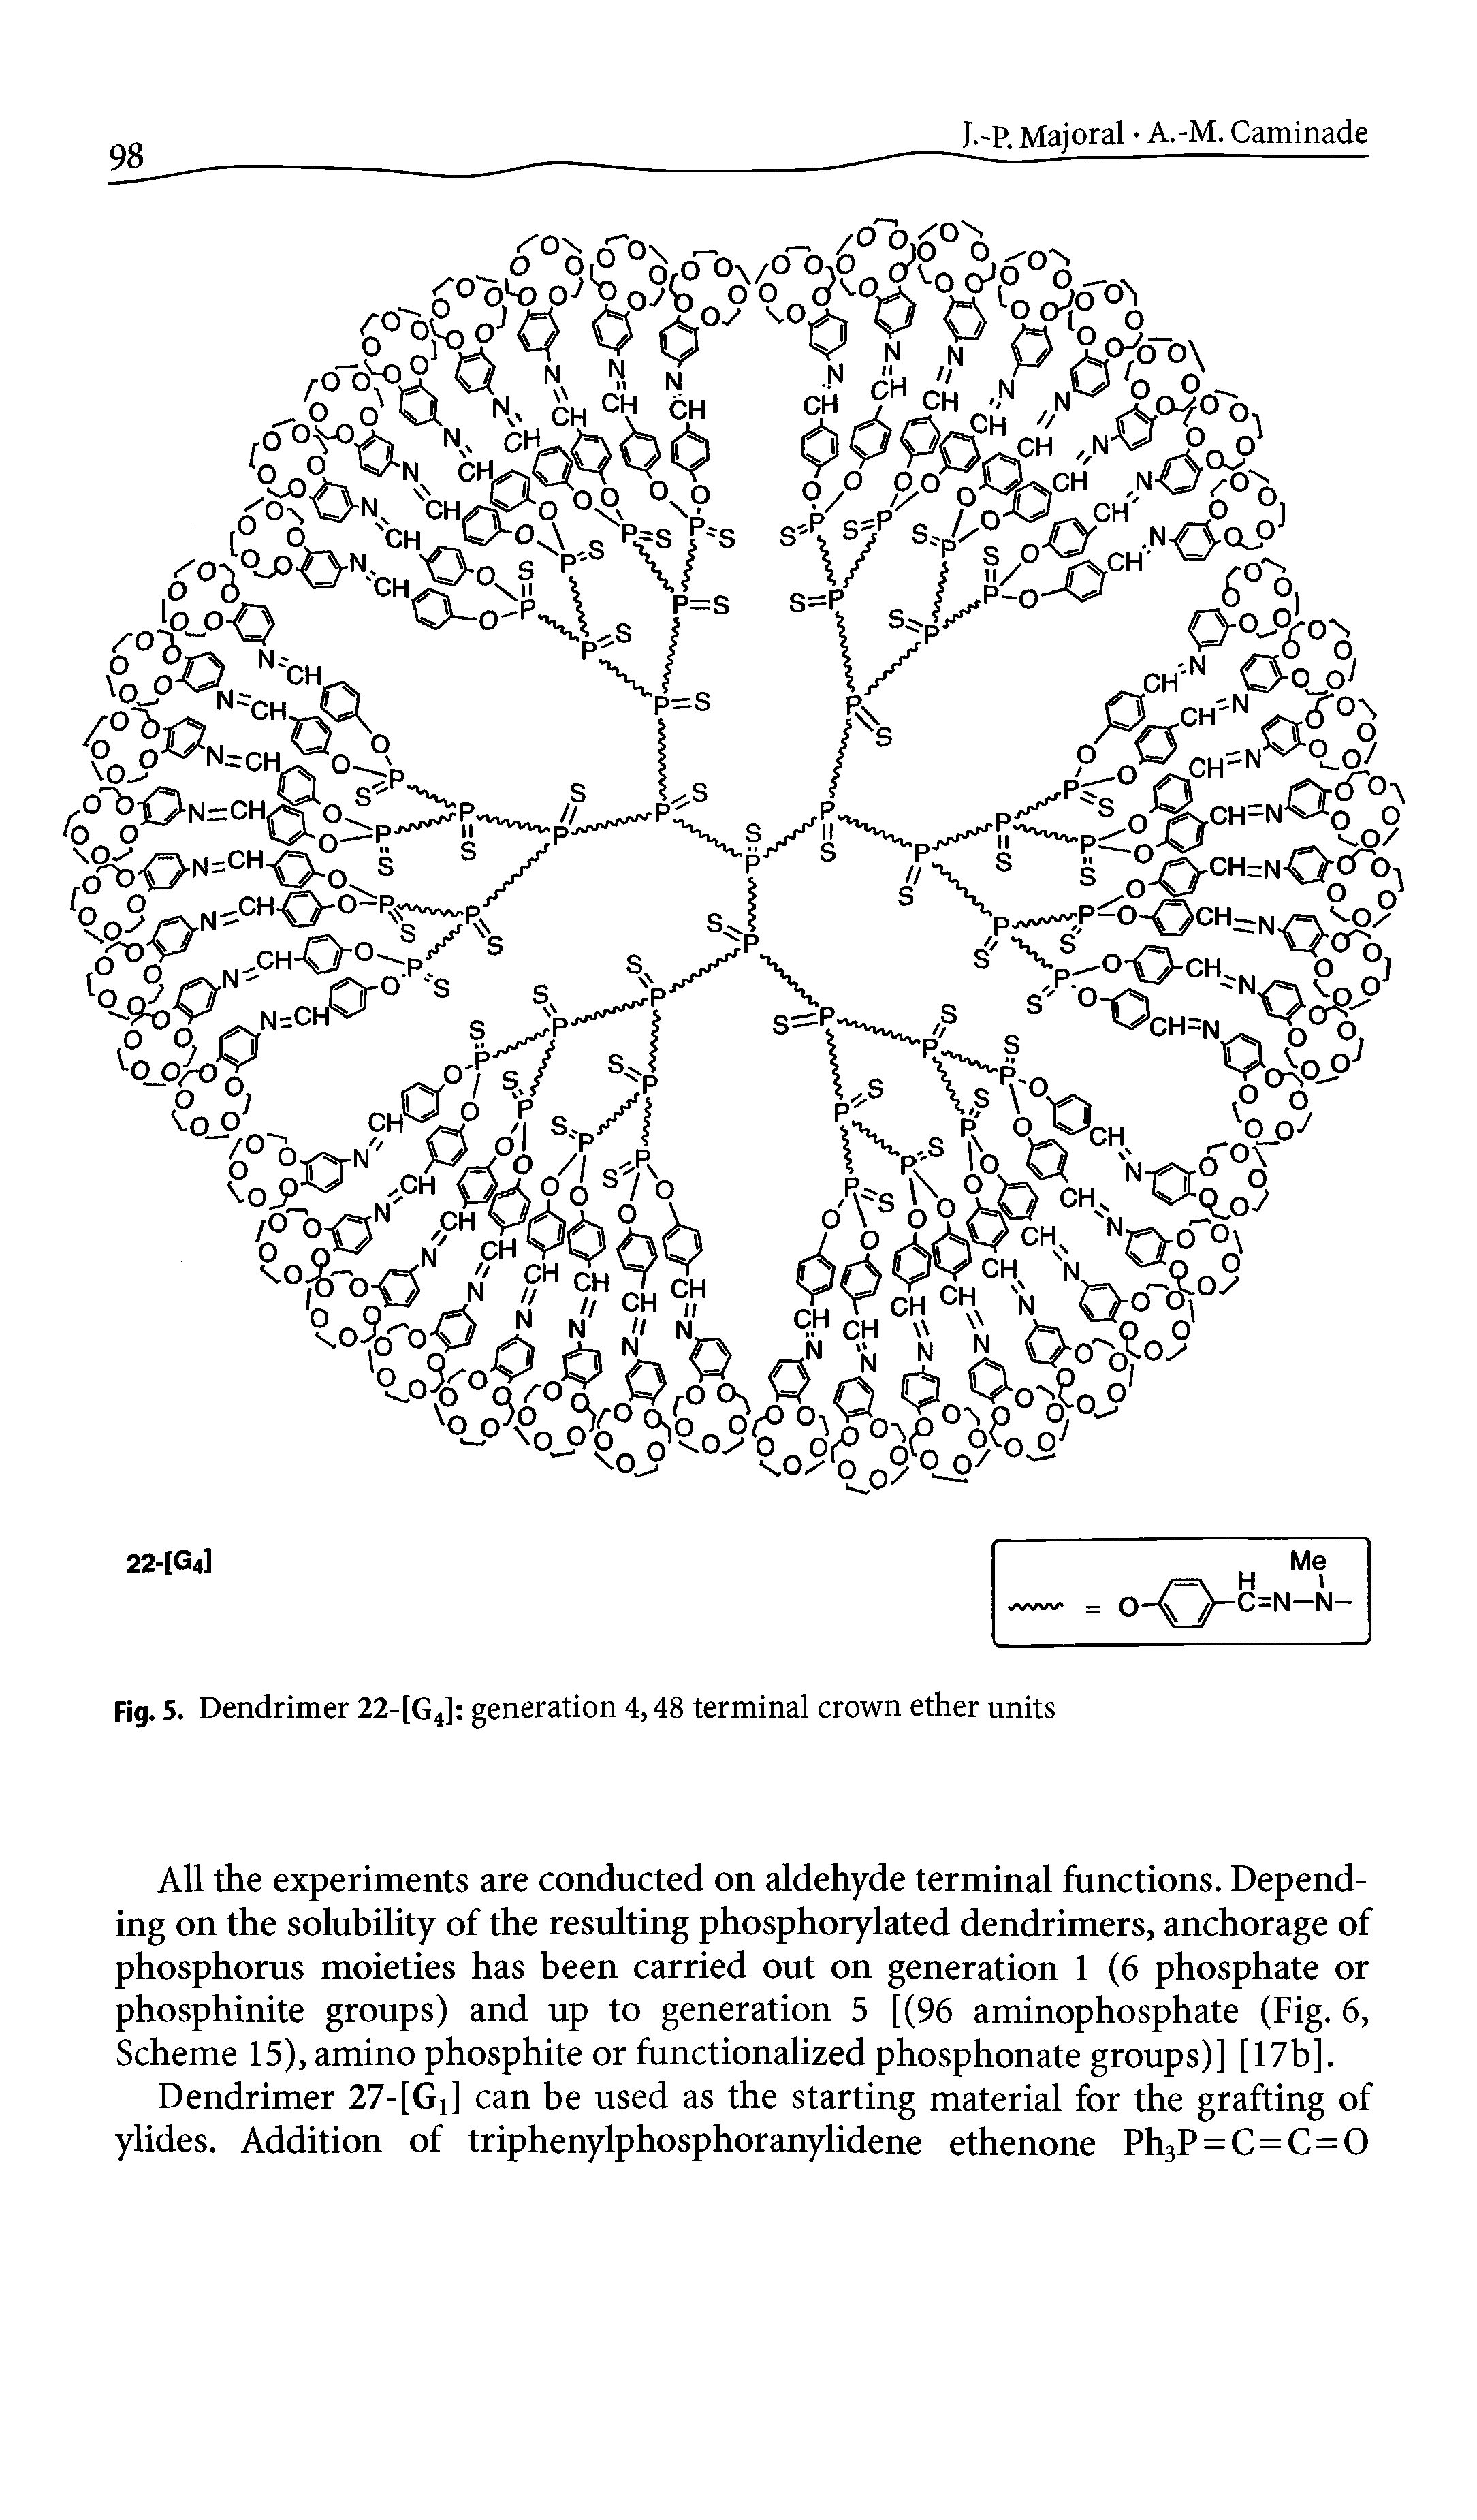 Fig. 5. Dendrimer 22-[G4] generation 4,48 terminal crown ether units...